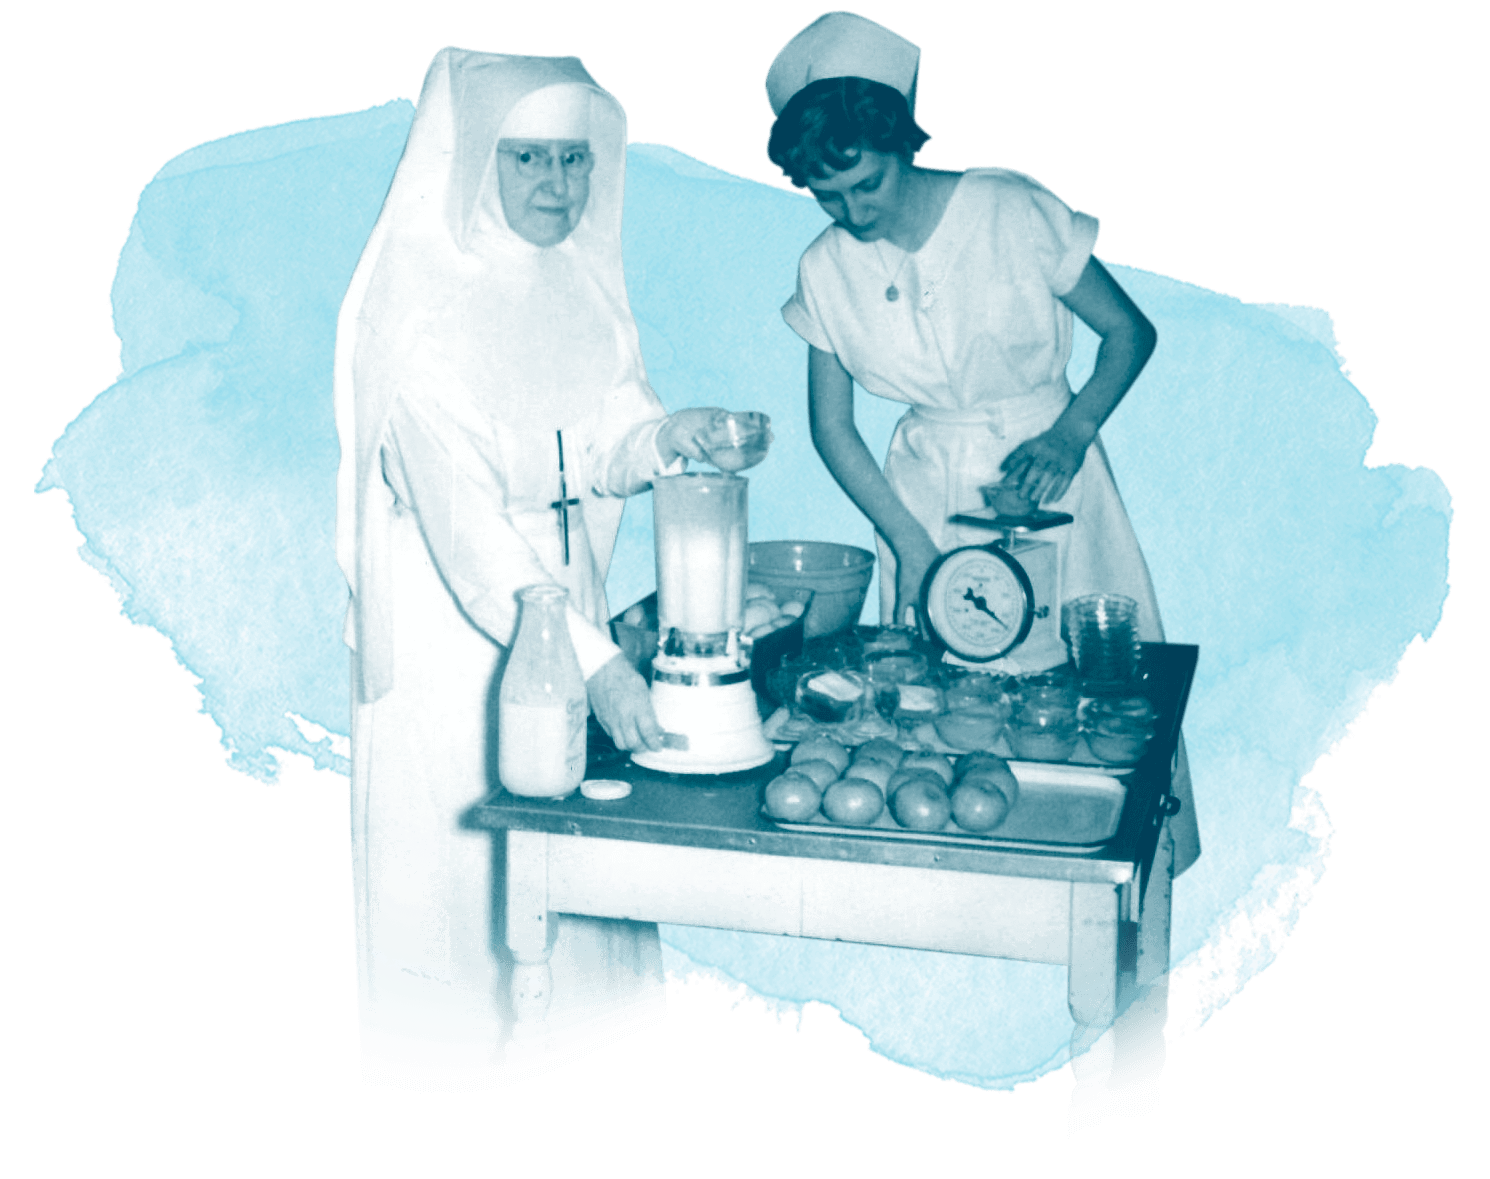 Nun and Nurse preparing food